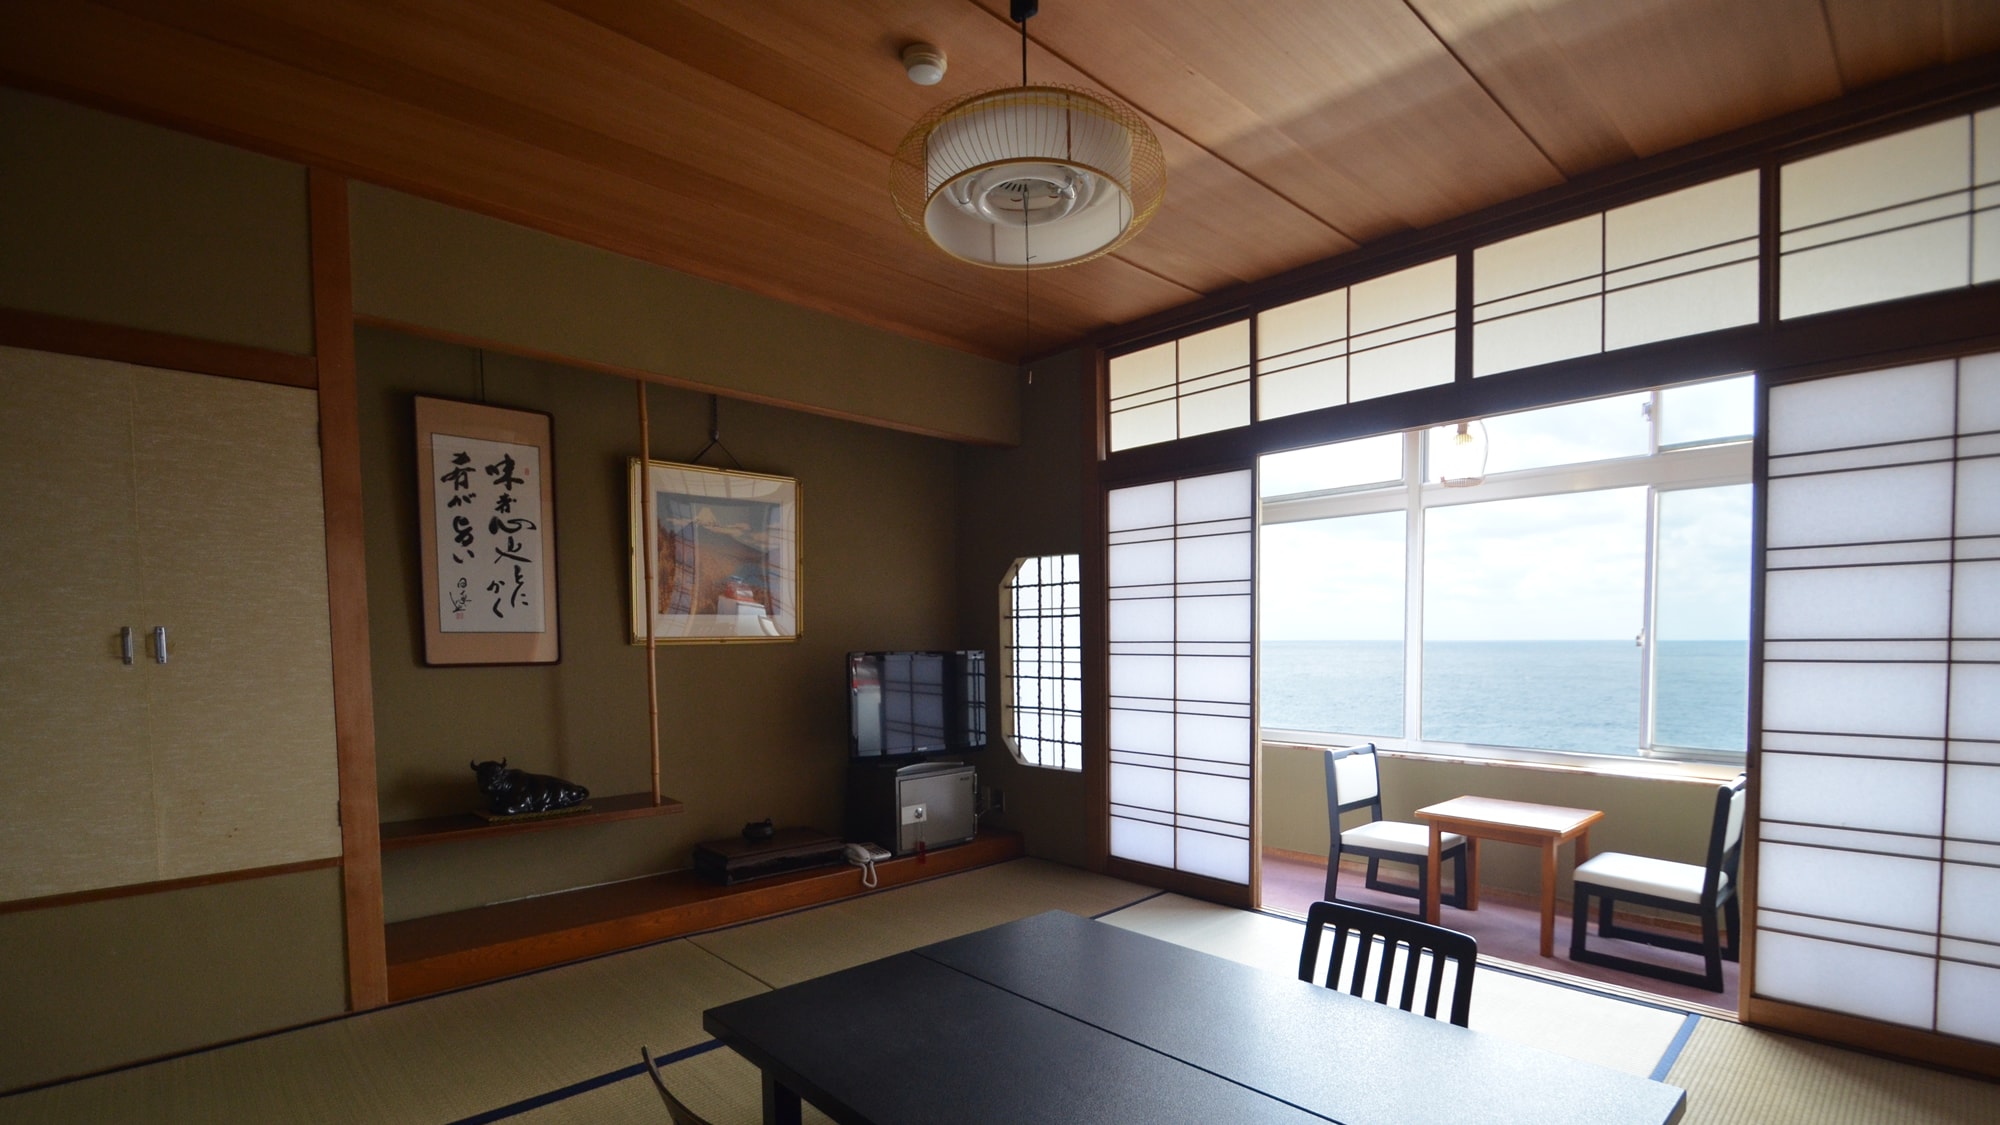 ■ Japanese-style room on the sea side